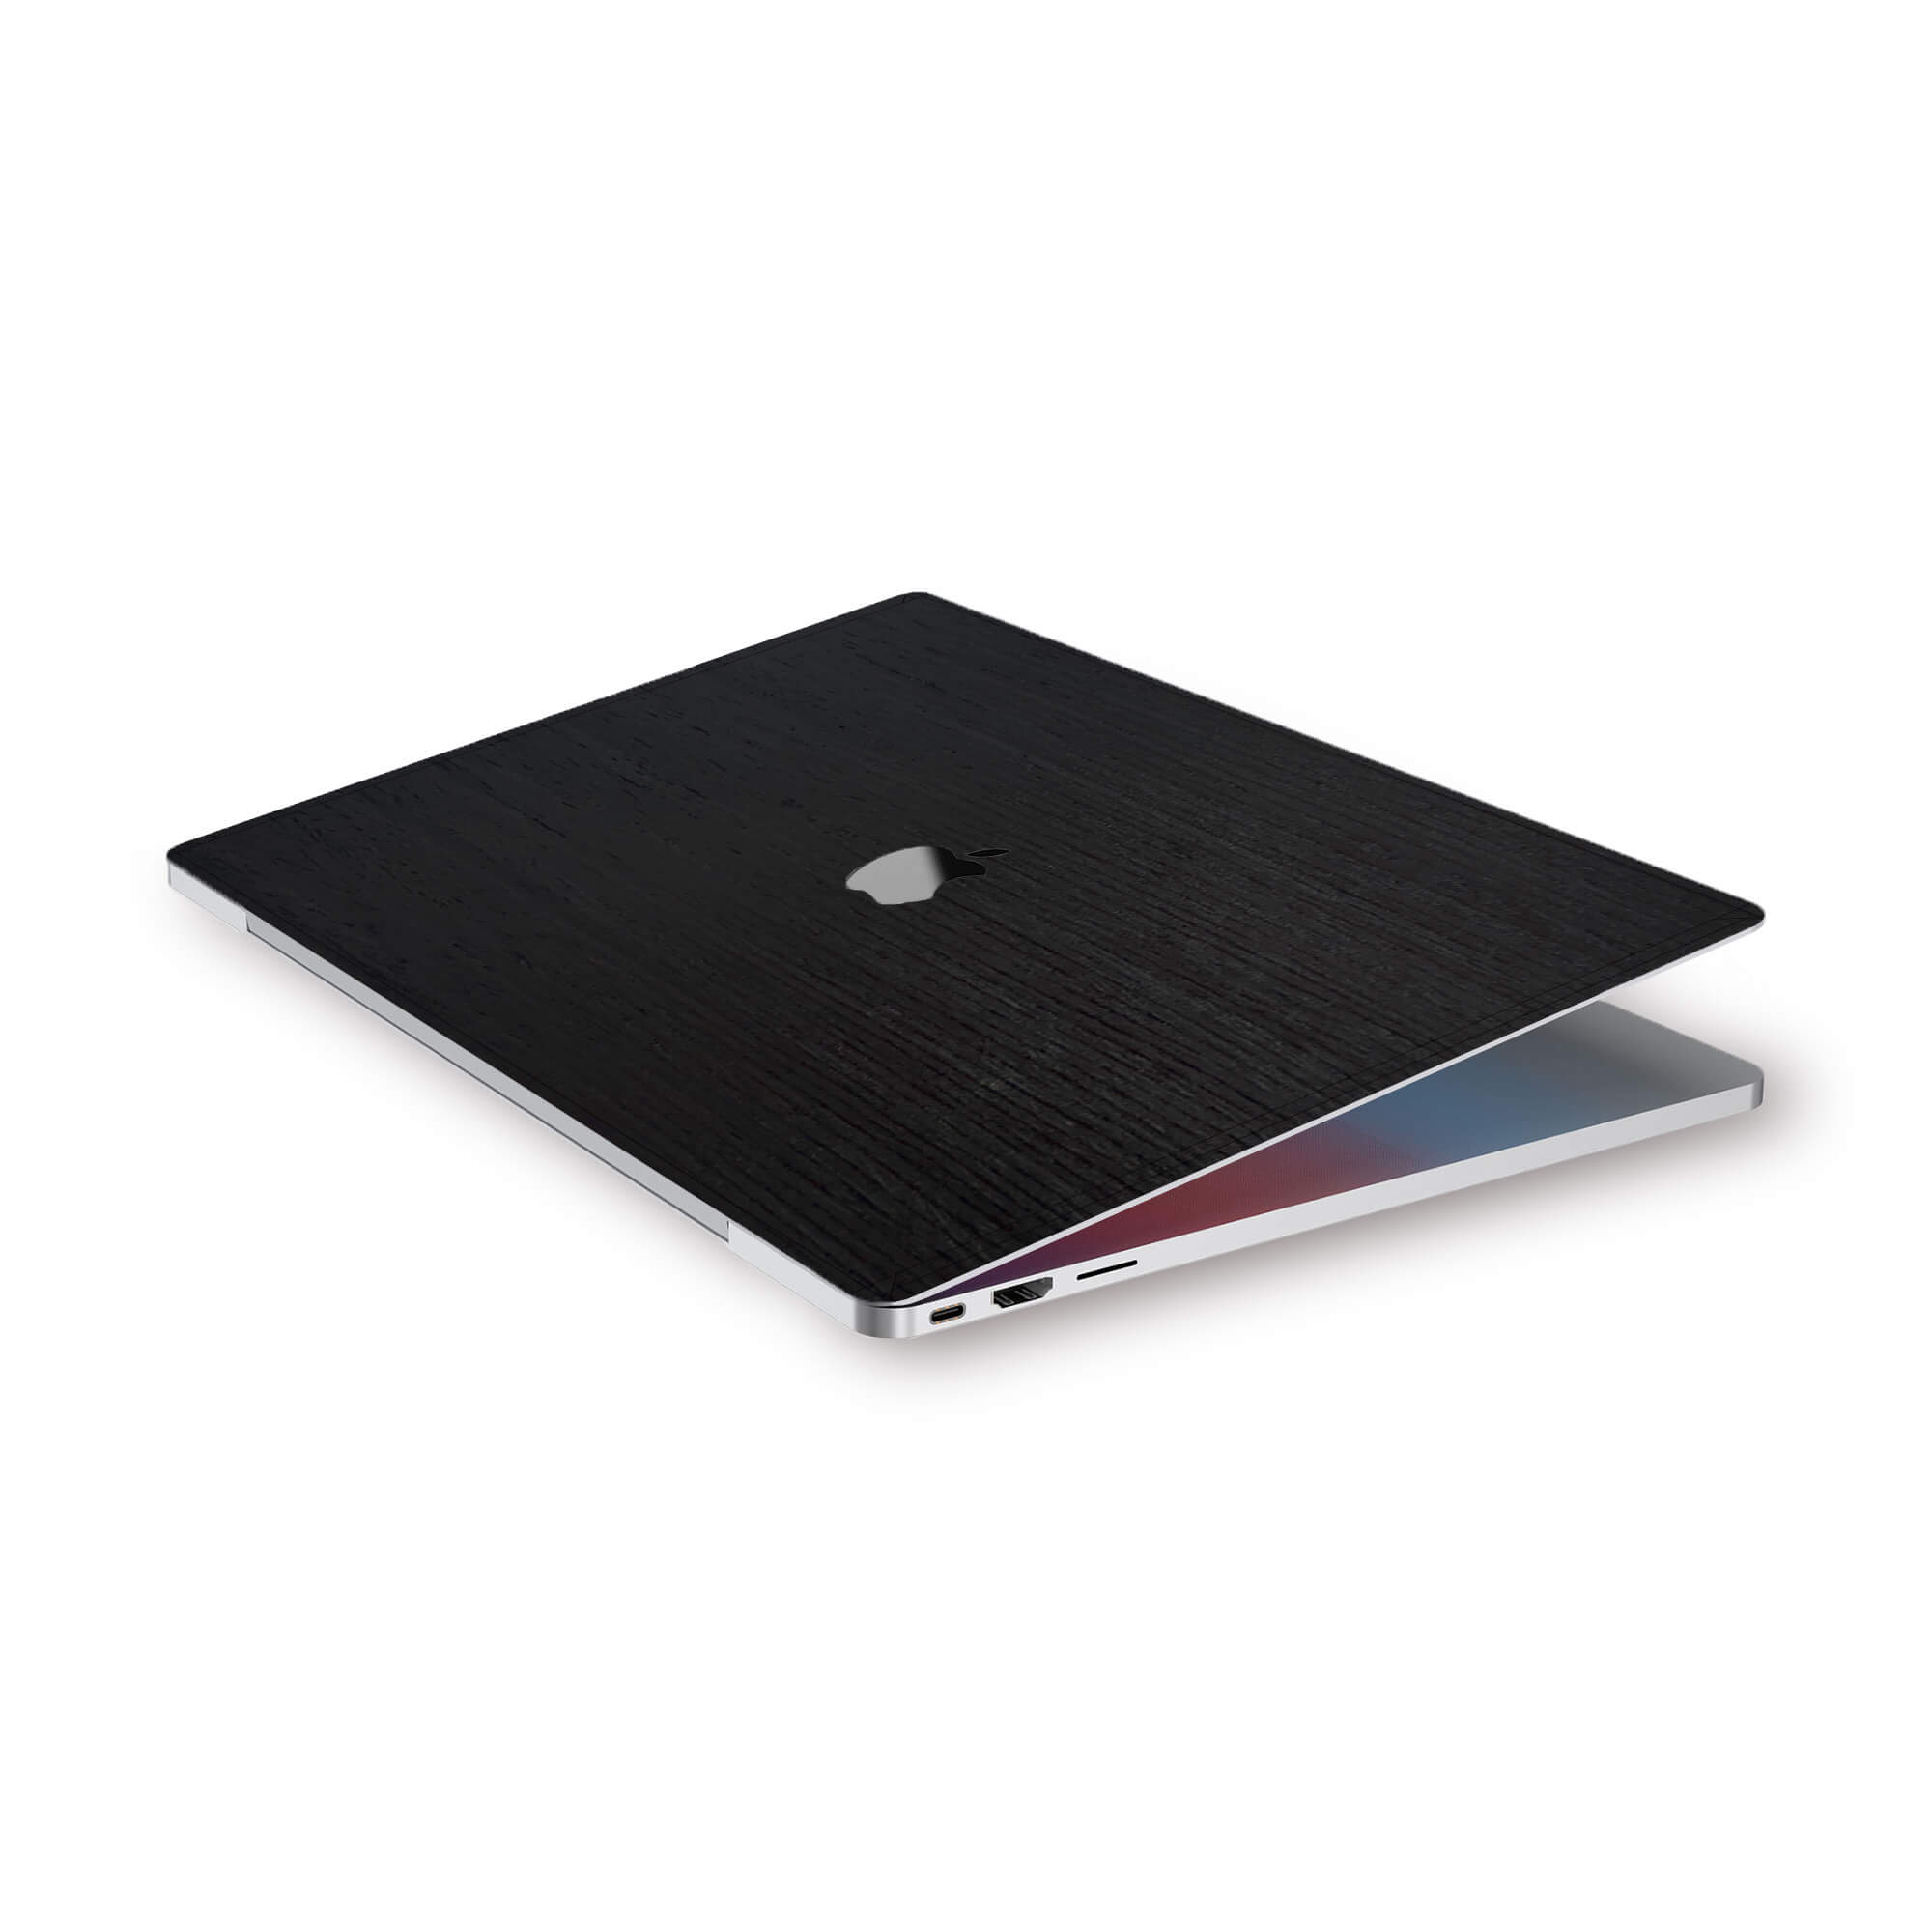 MacBook Wood Trackpad – Glitty